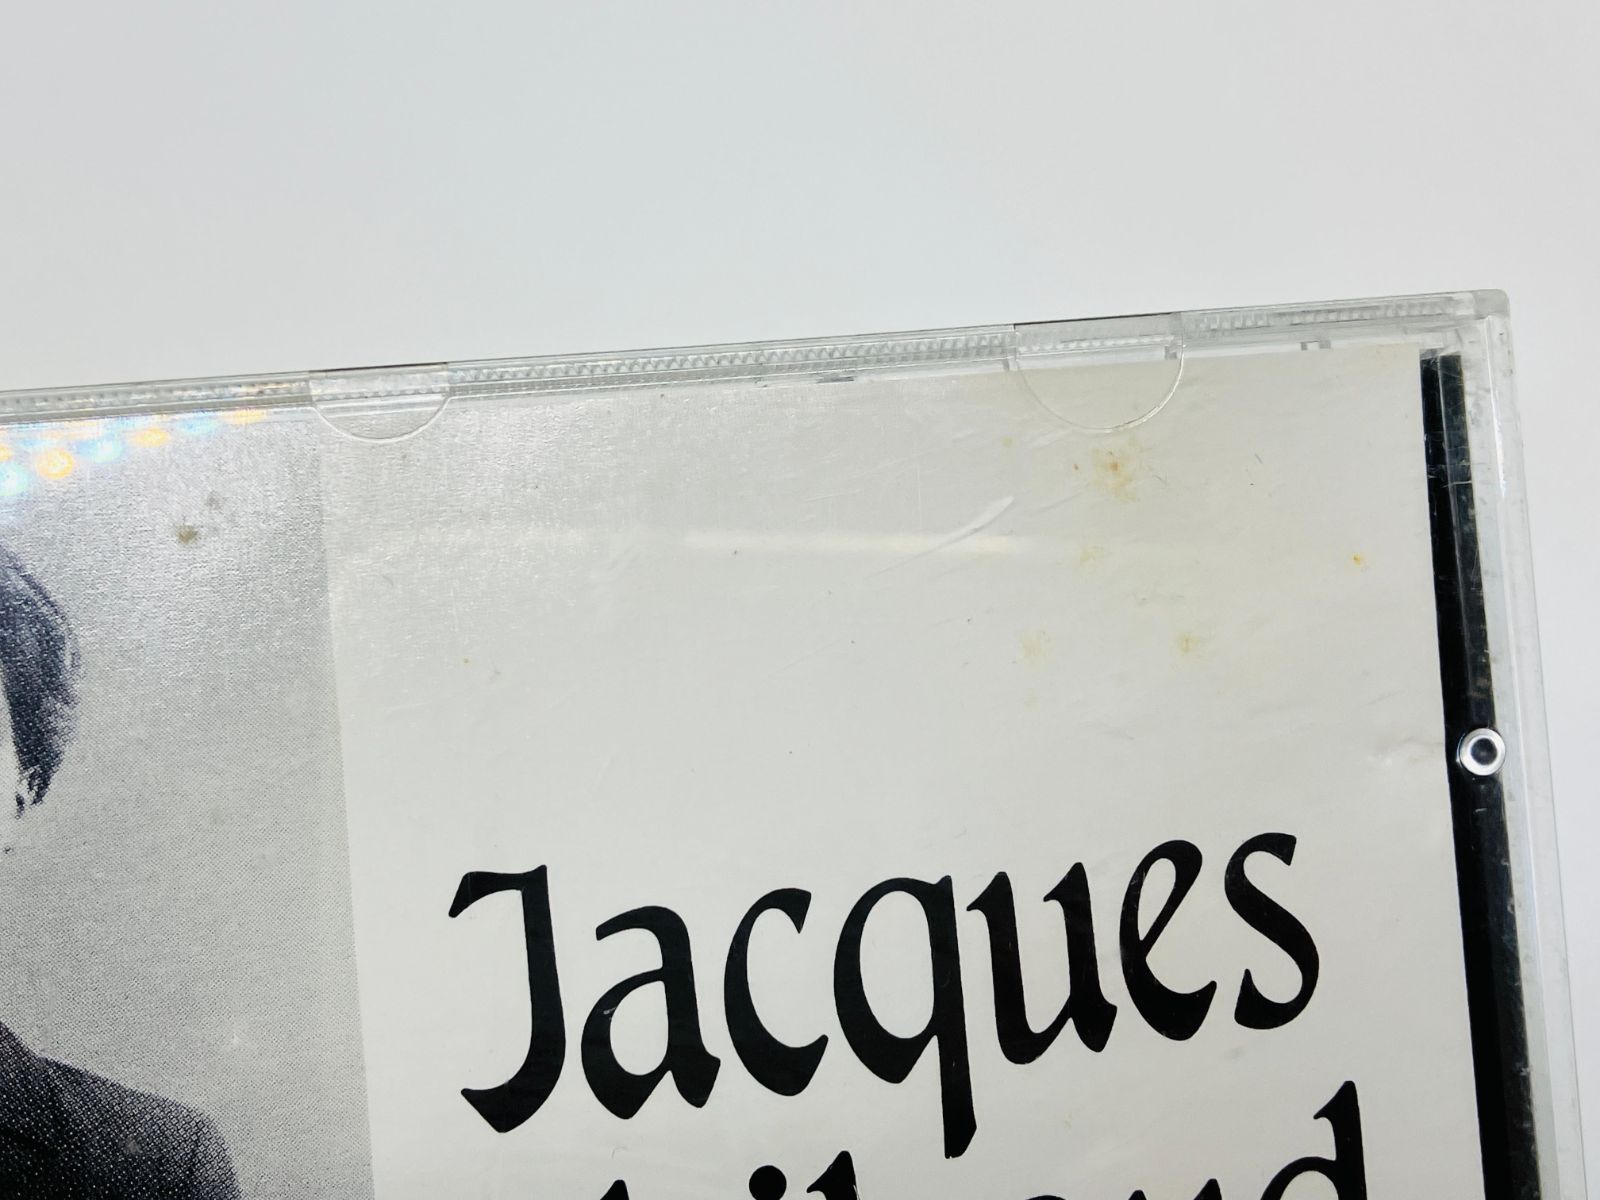 CD JACQUES THIBAUD 1922 23 HMV u0026 1924 VICTOR RECORDINGS / ジャックティボー BIDDULPH  LAB 014 M05 - メルカリ